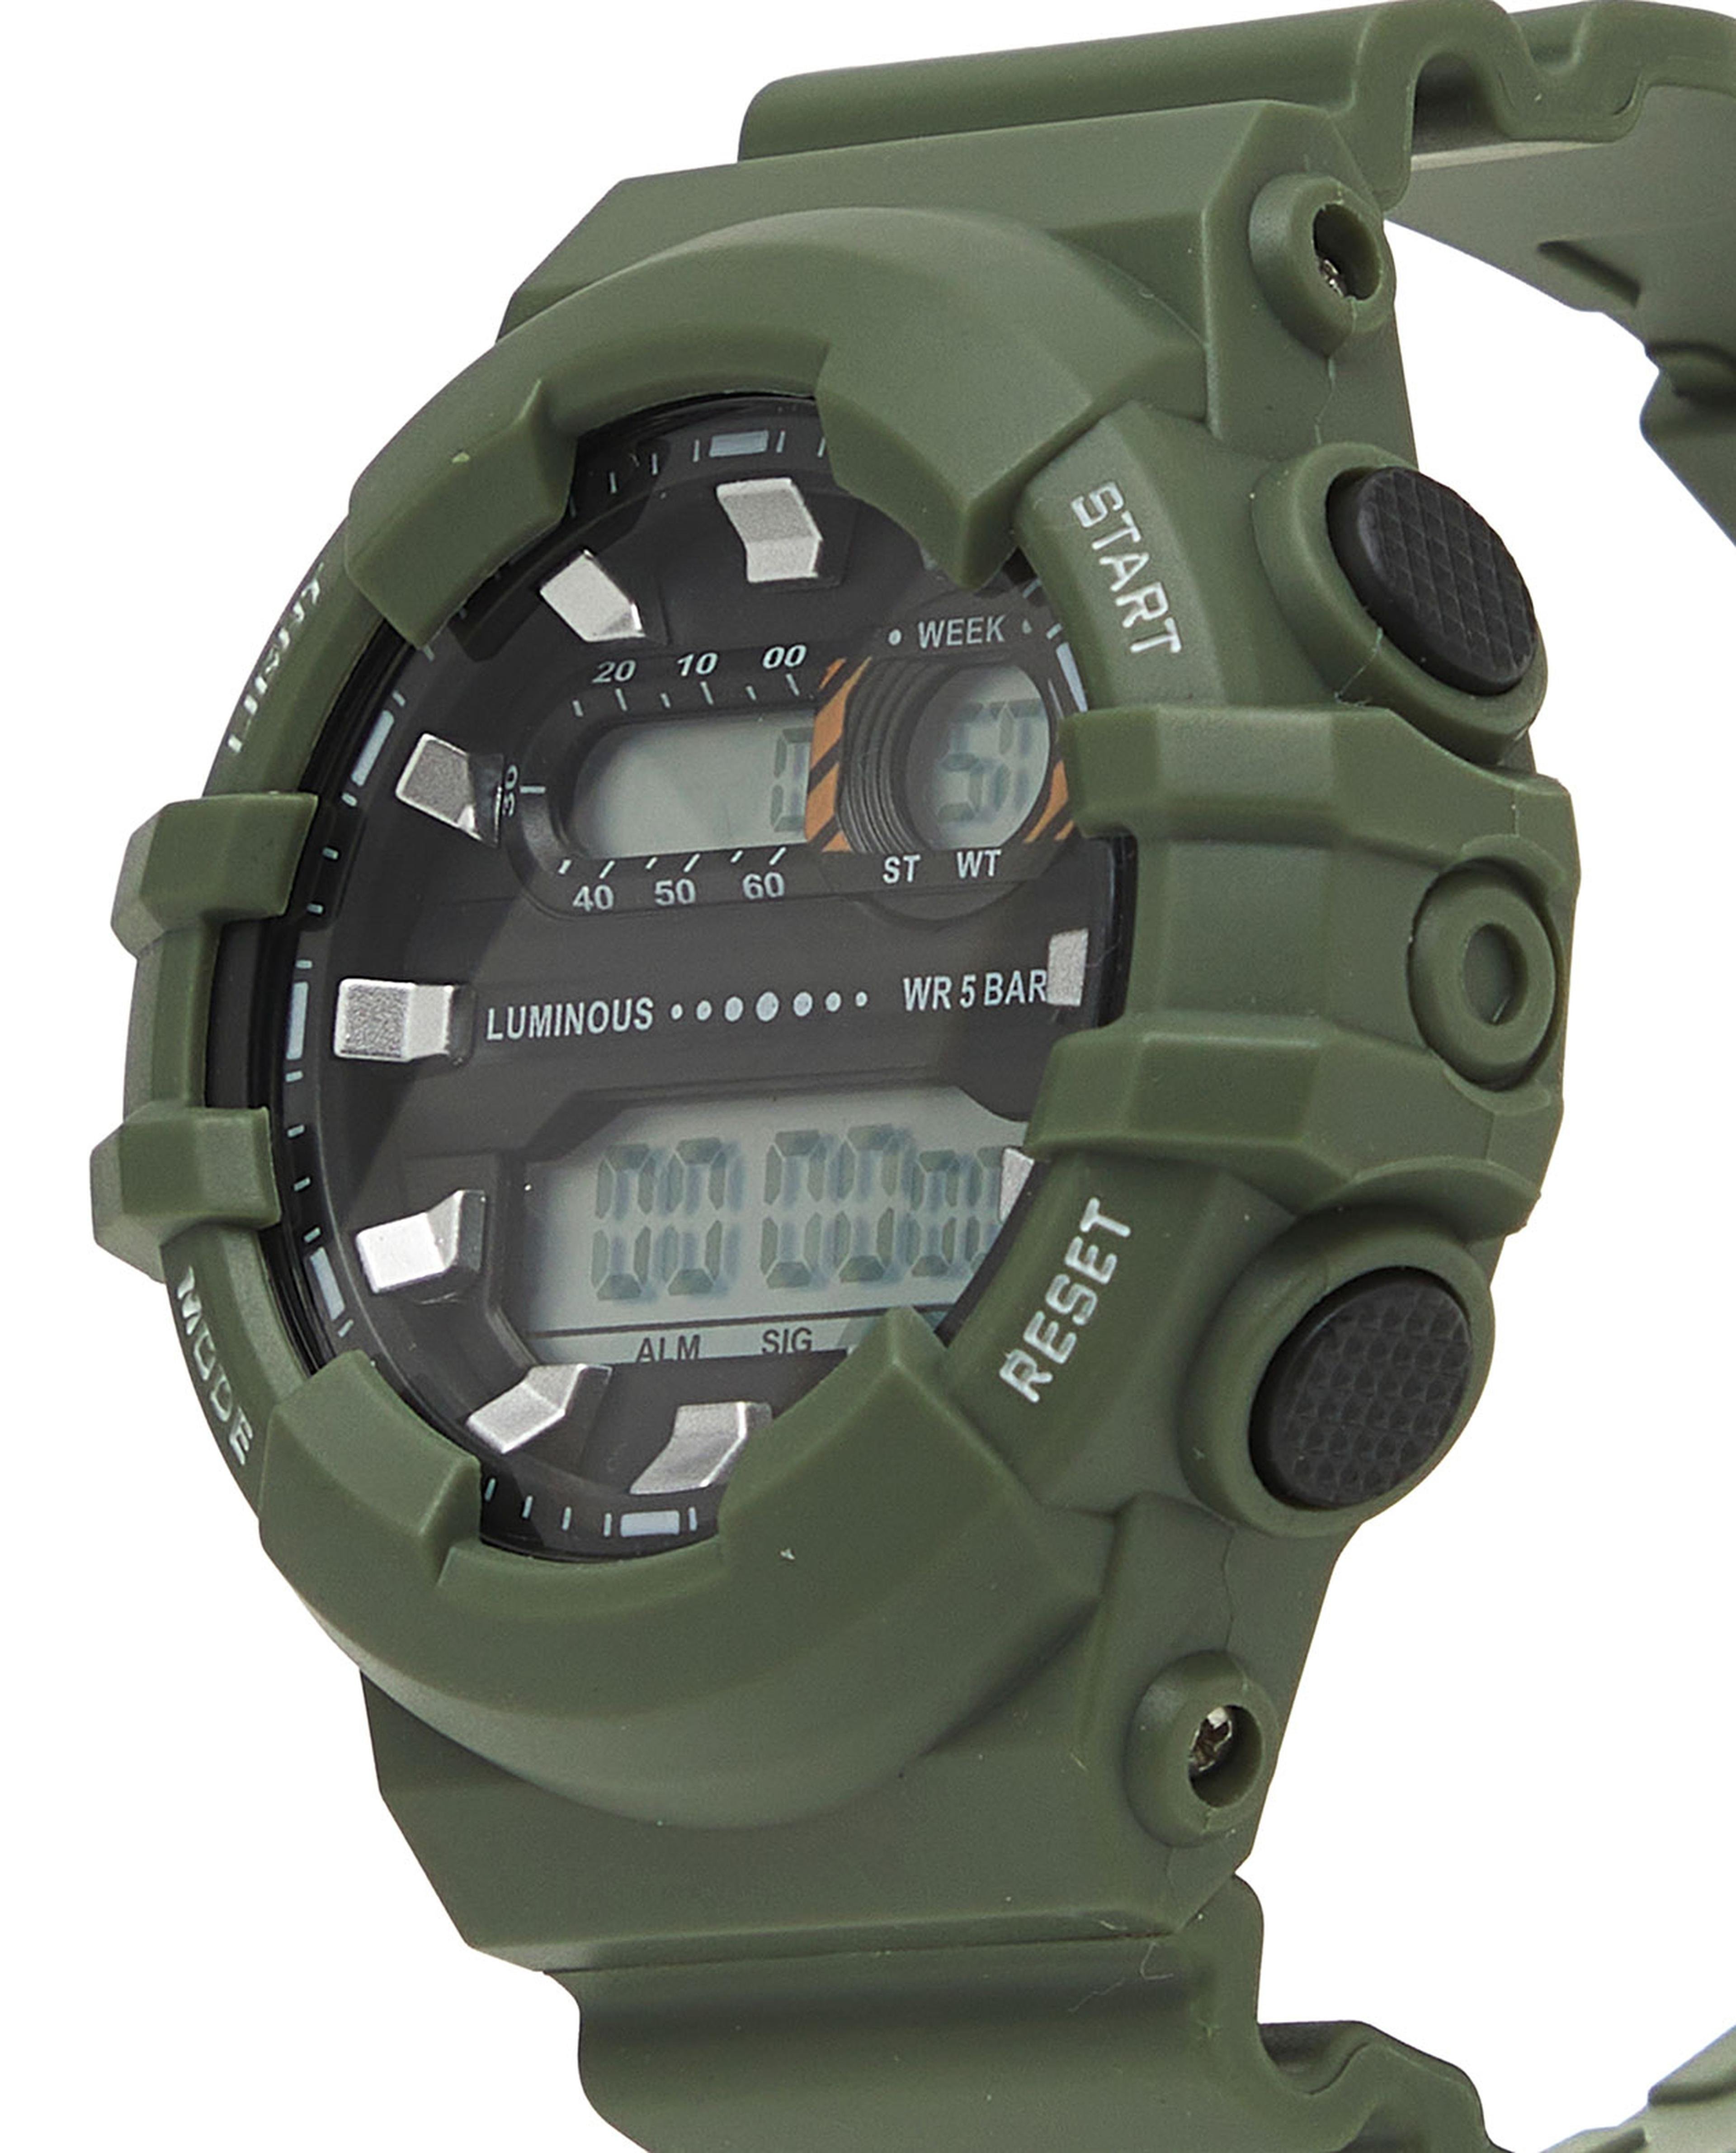 Digital Watch with Buckle Strap